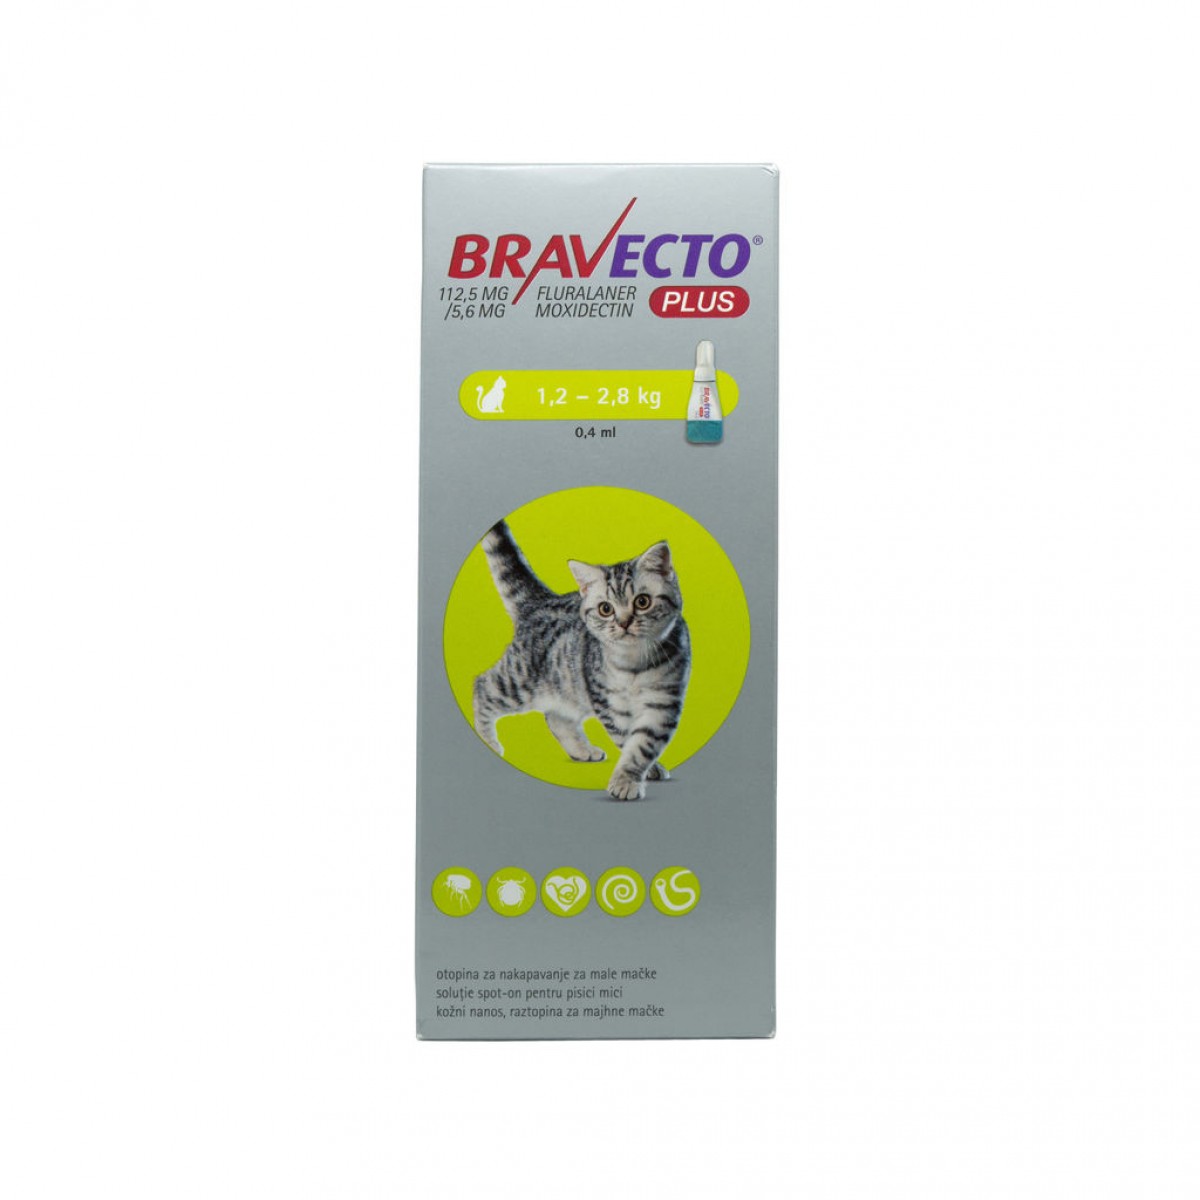 Bravecto Plus Spot On pentru pisici intre 1.2 si 2.8kg, 1 piepta 112.5mg, Antiparazitare externe, Antiparazitare, Pisici 